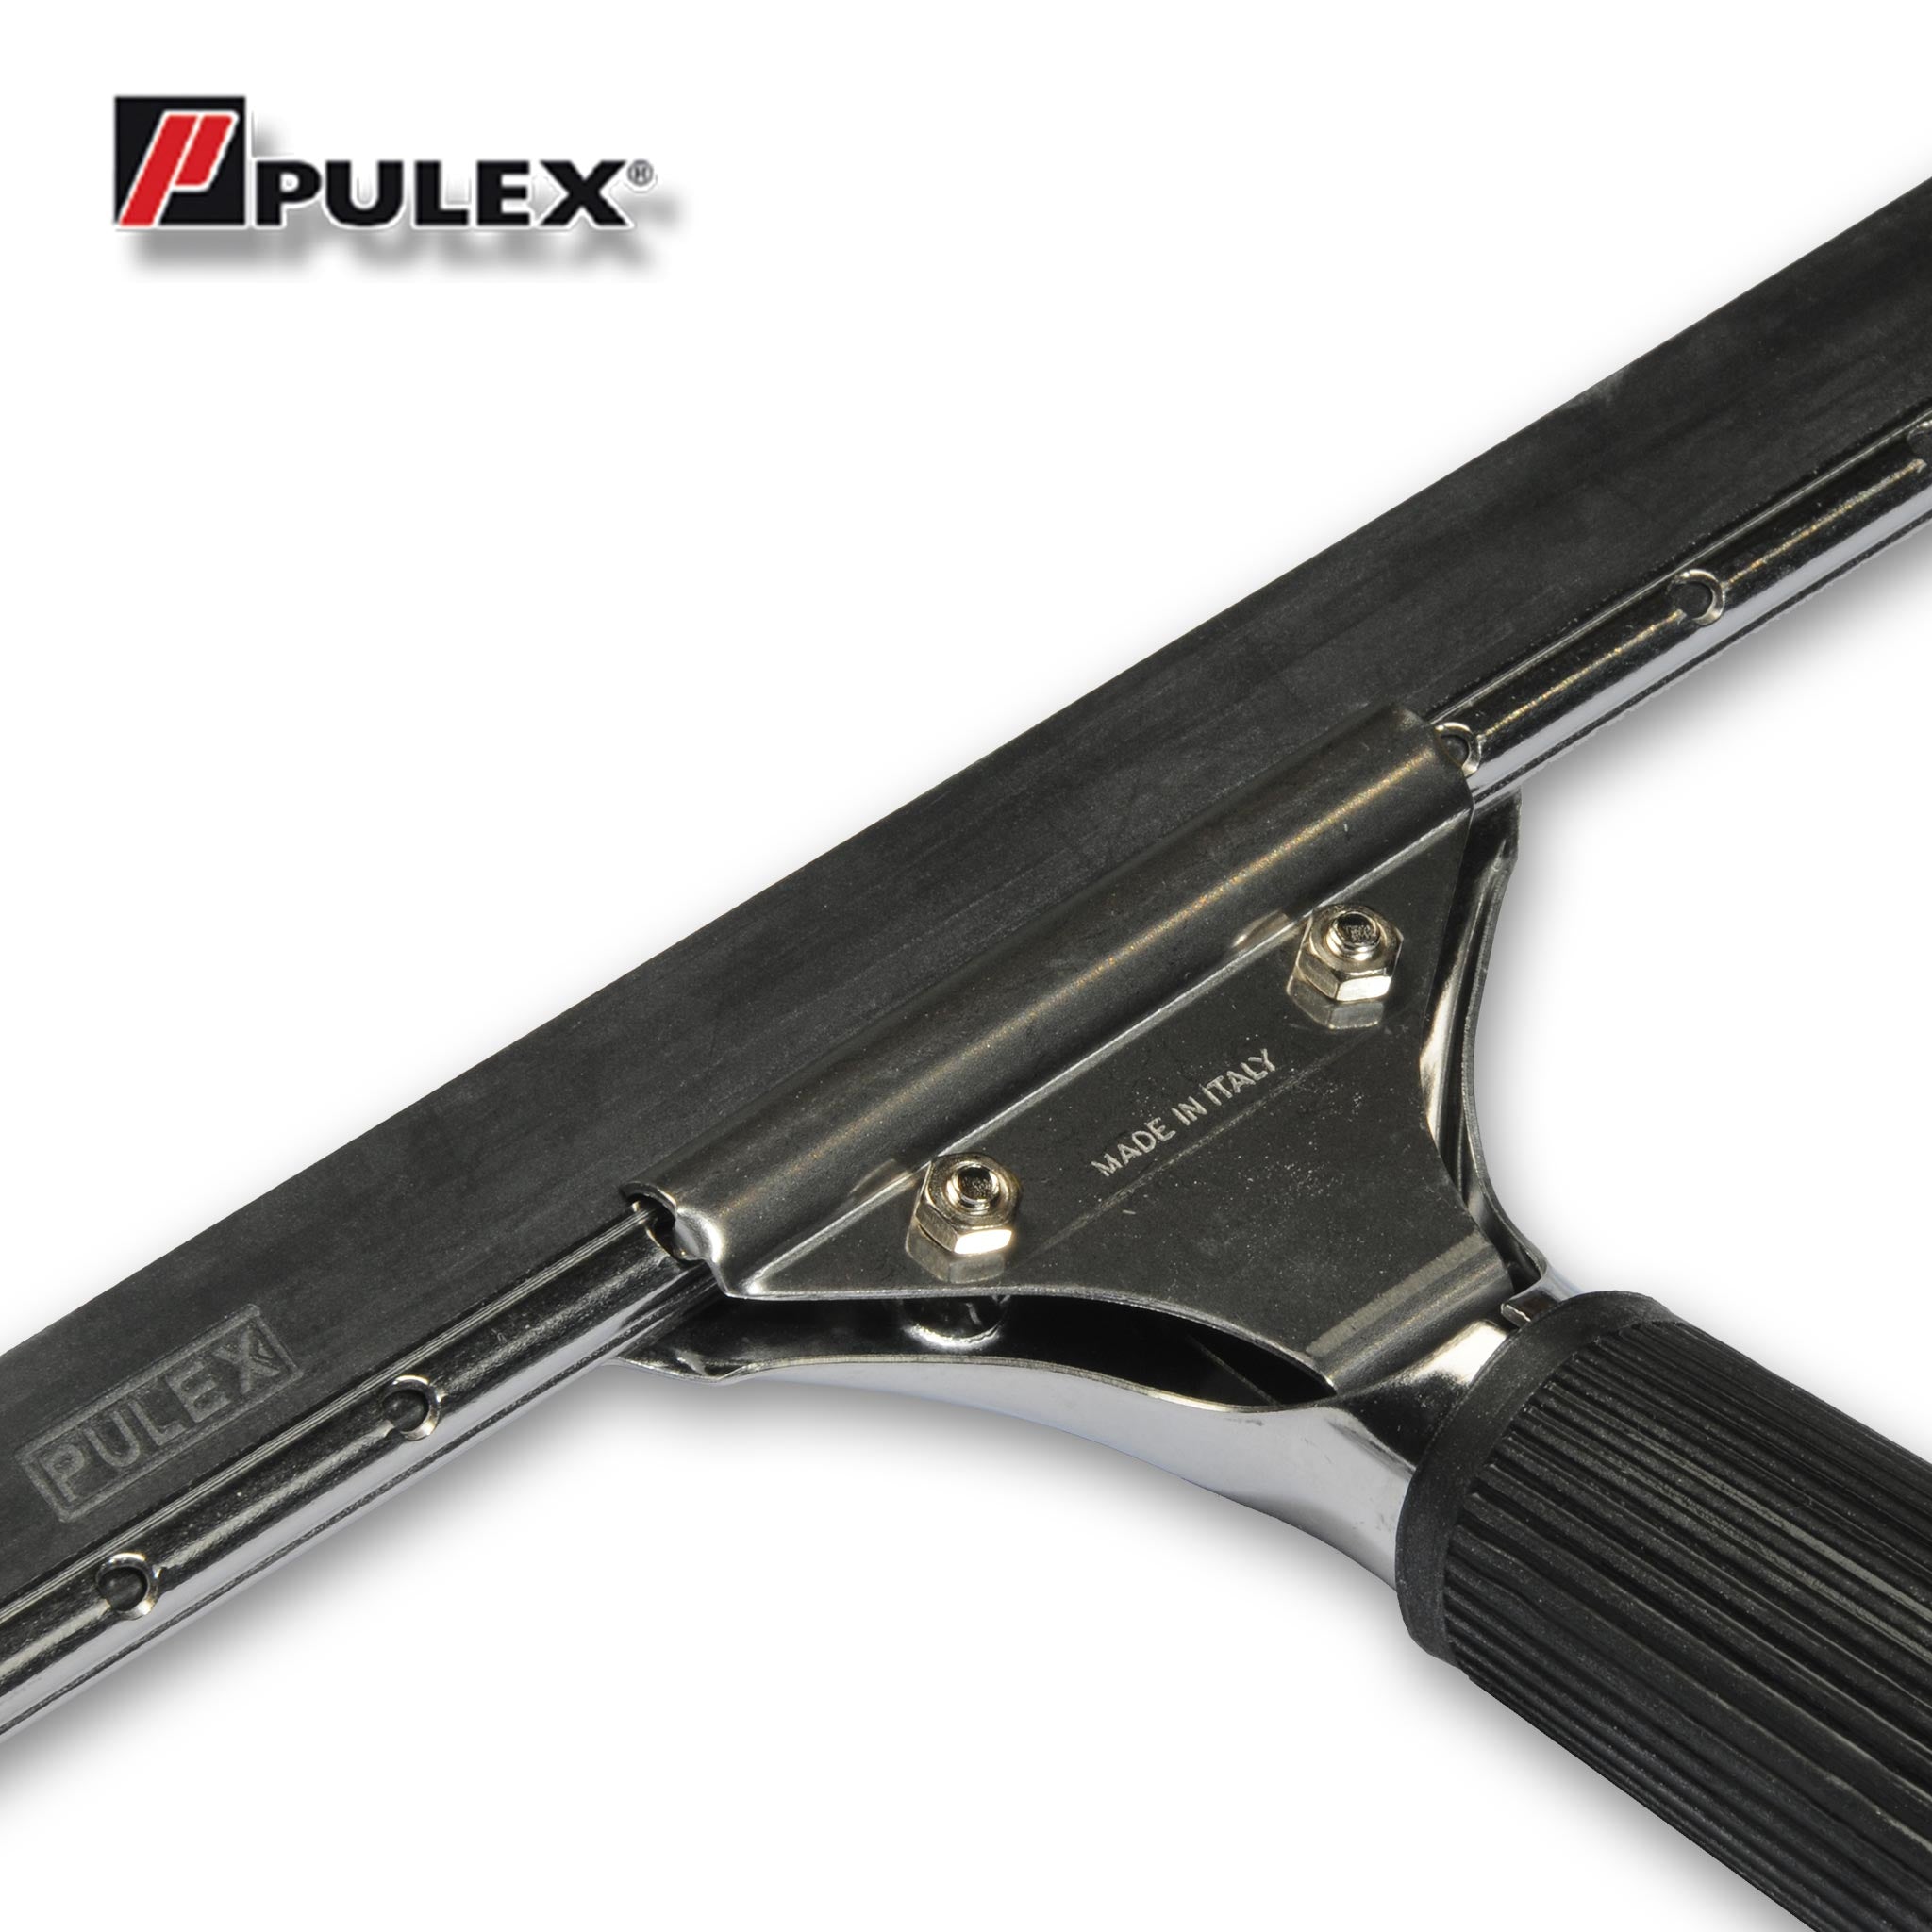 Pulex Inox (Stainless Steel) Window Squeegee